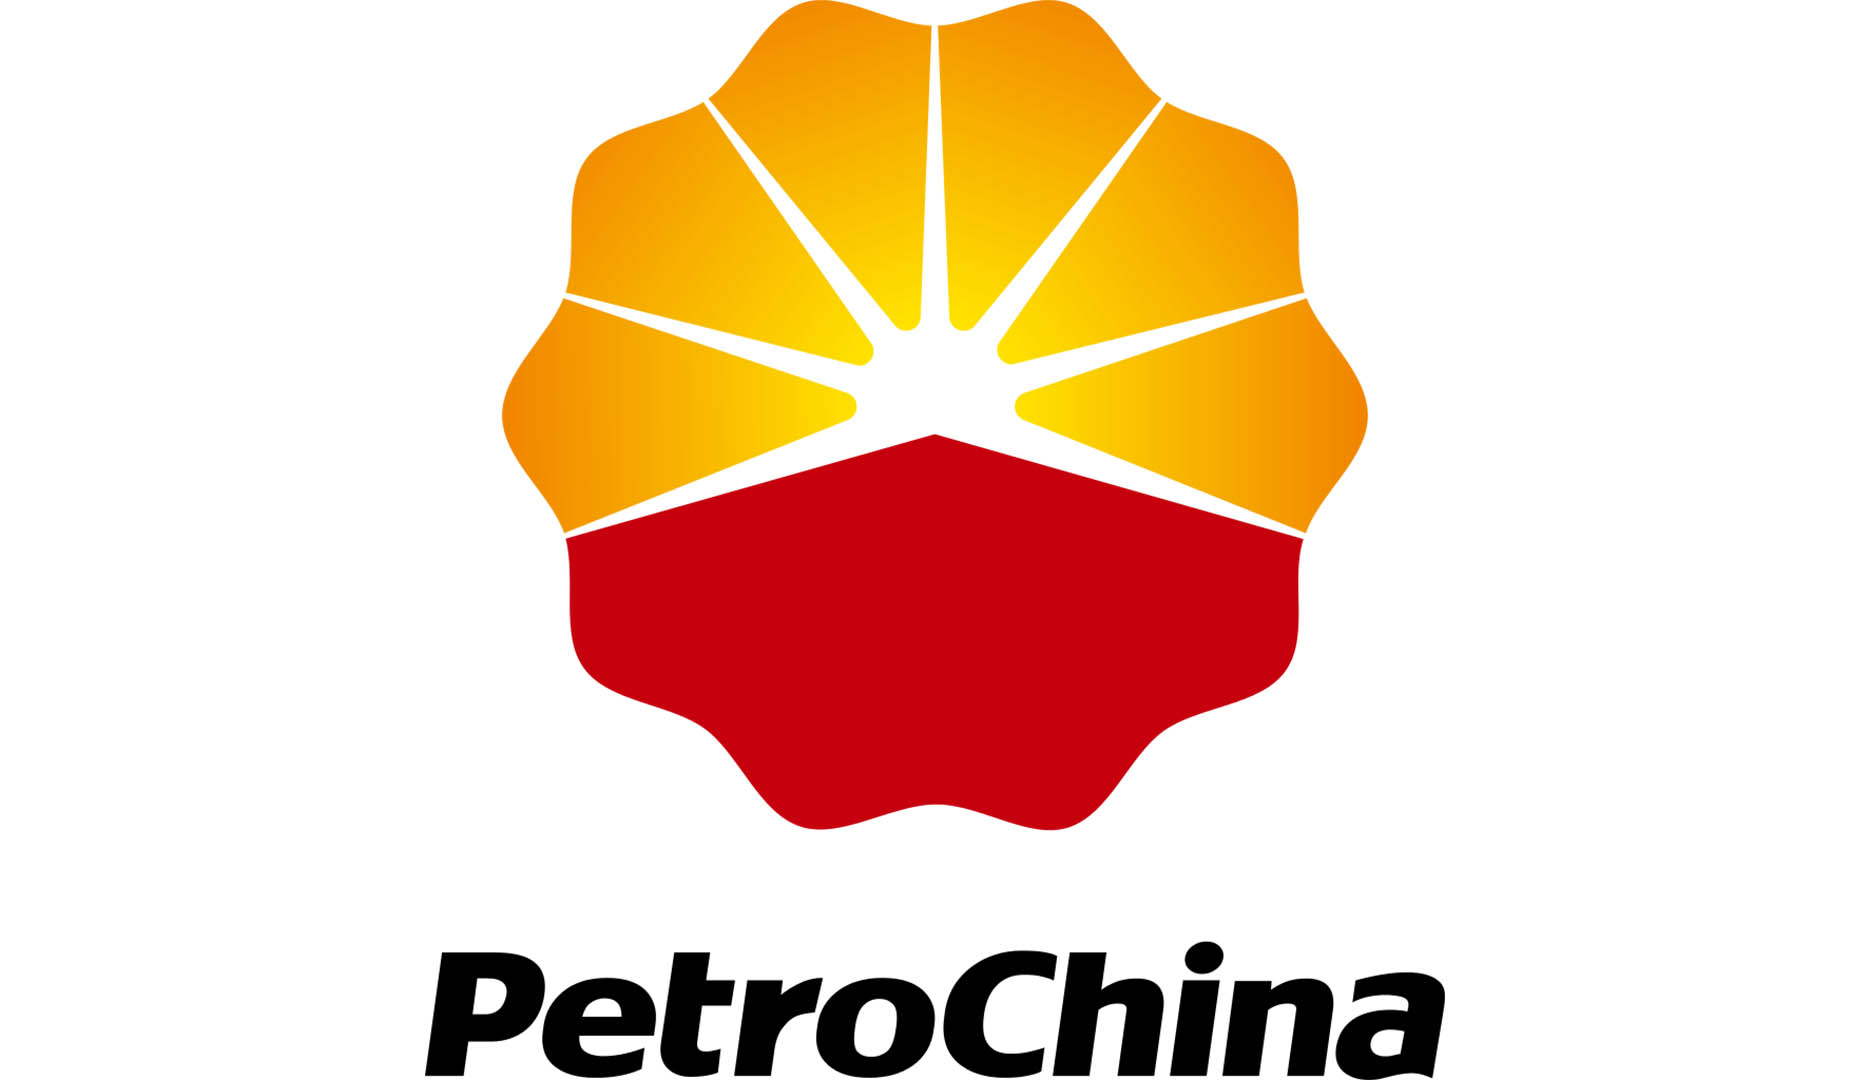 Petrochina's logo